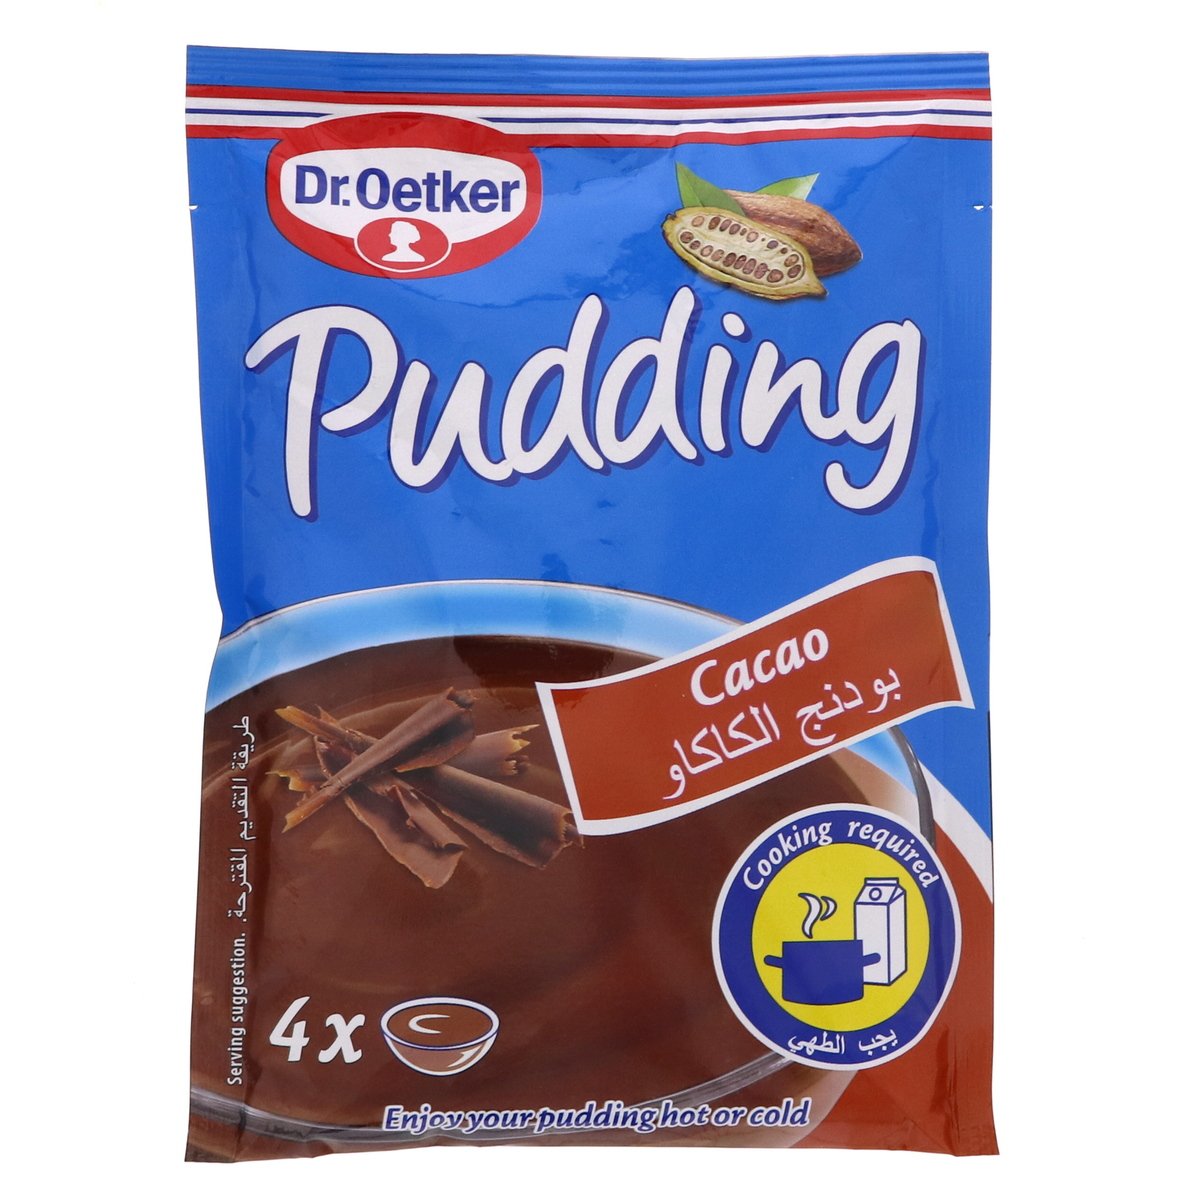 Dr. Oetker Pudding Cacao 156g